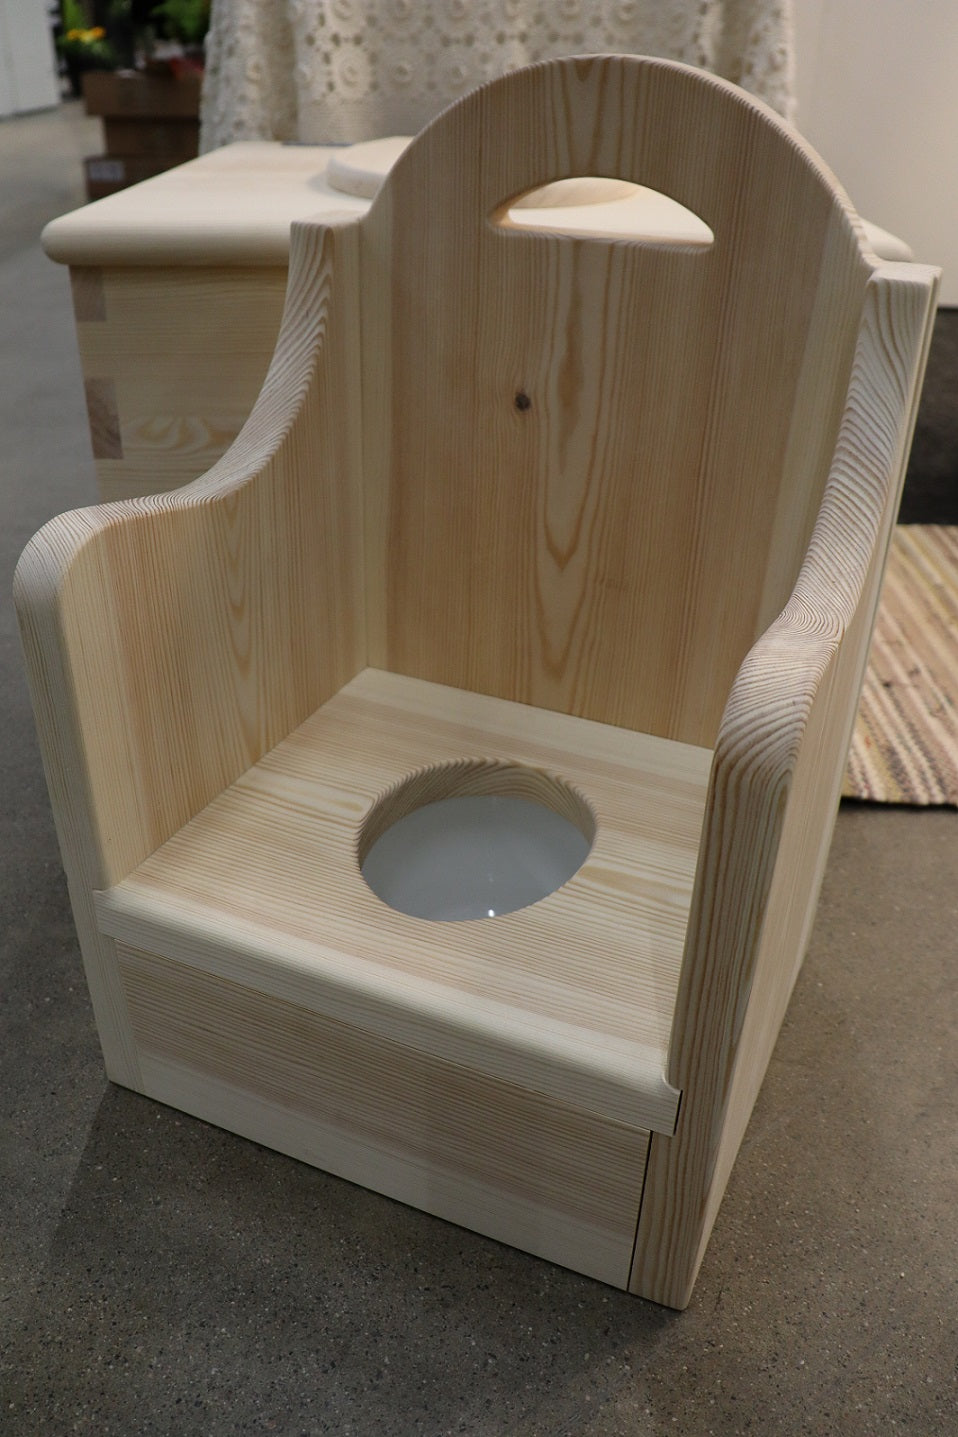 Wooden potty chair for children